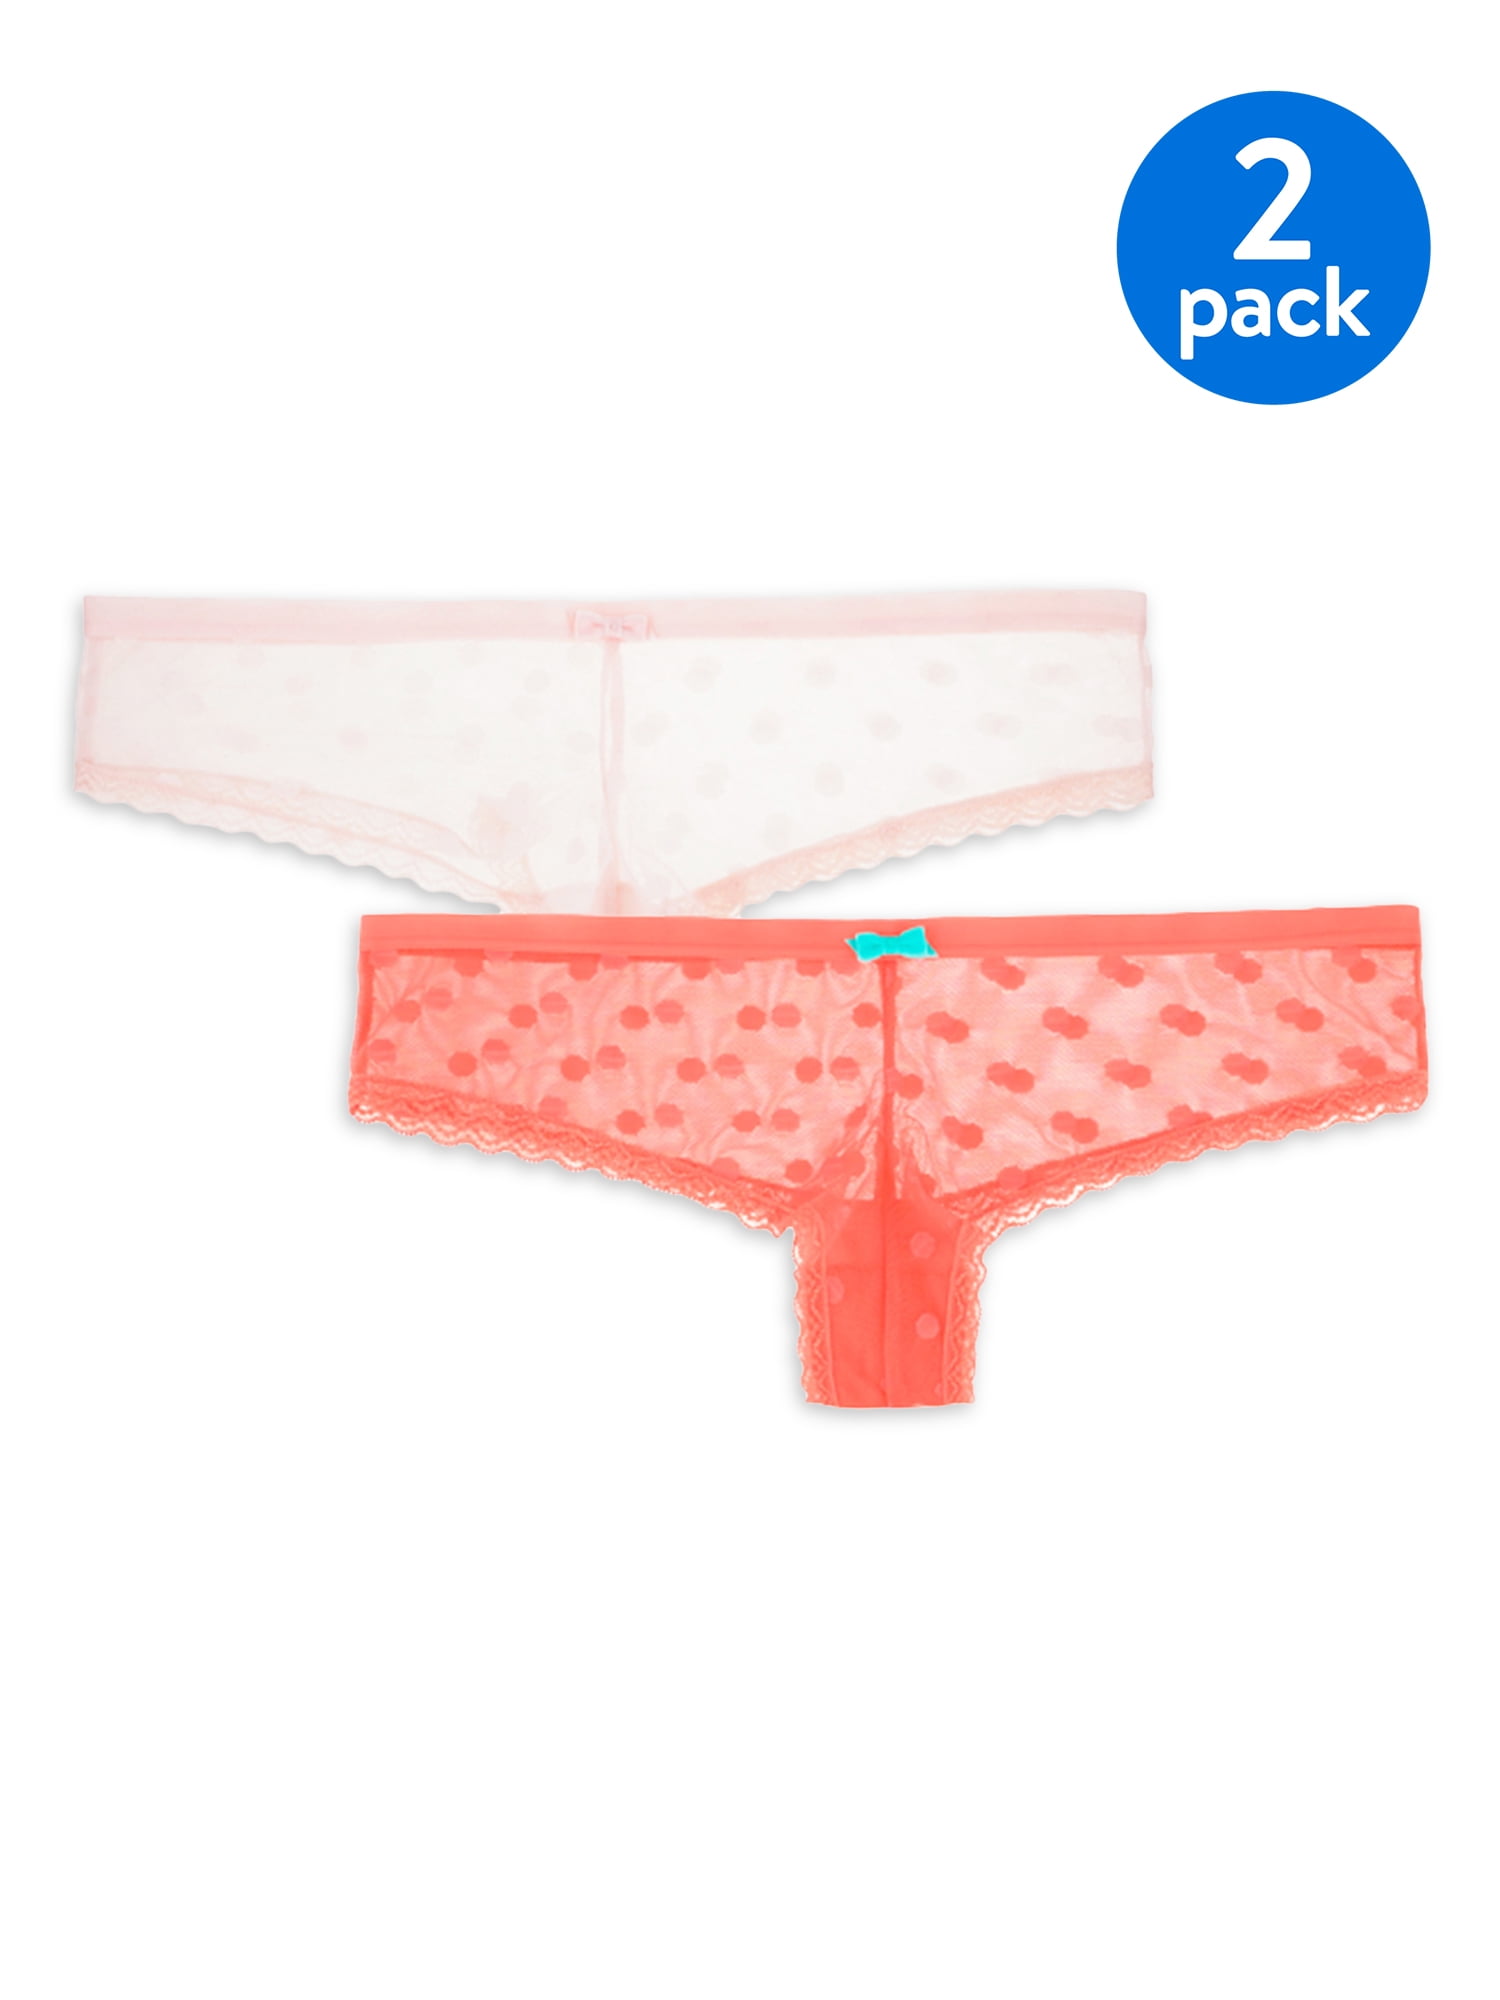 Undies.com Women's Dot Mesh Lace Cheeky Panties, 2 Pack 